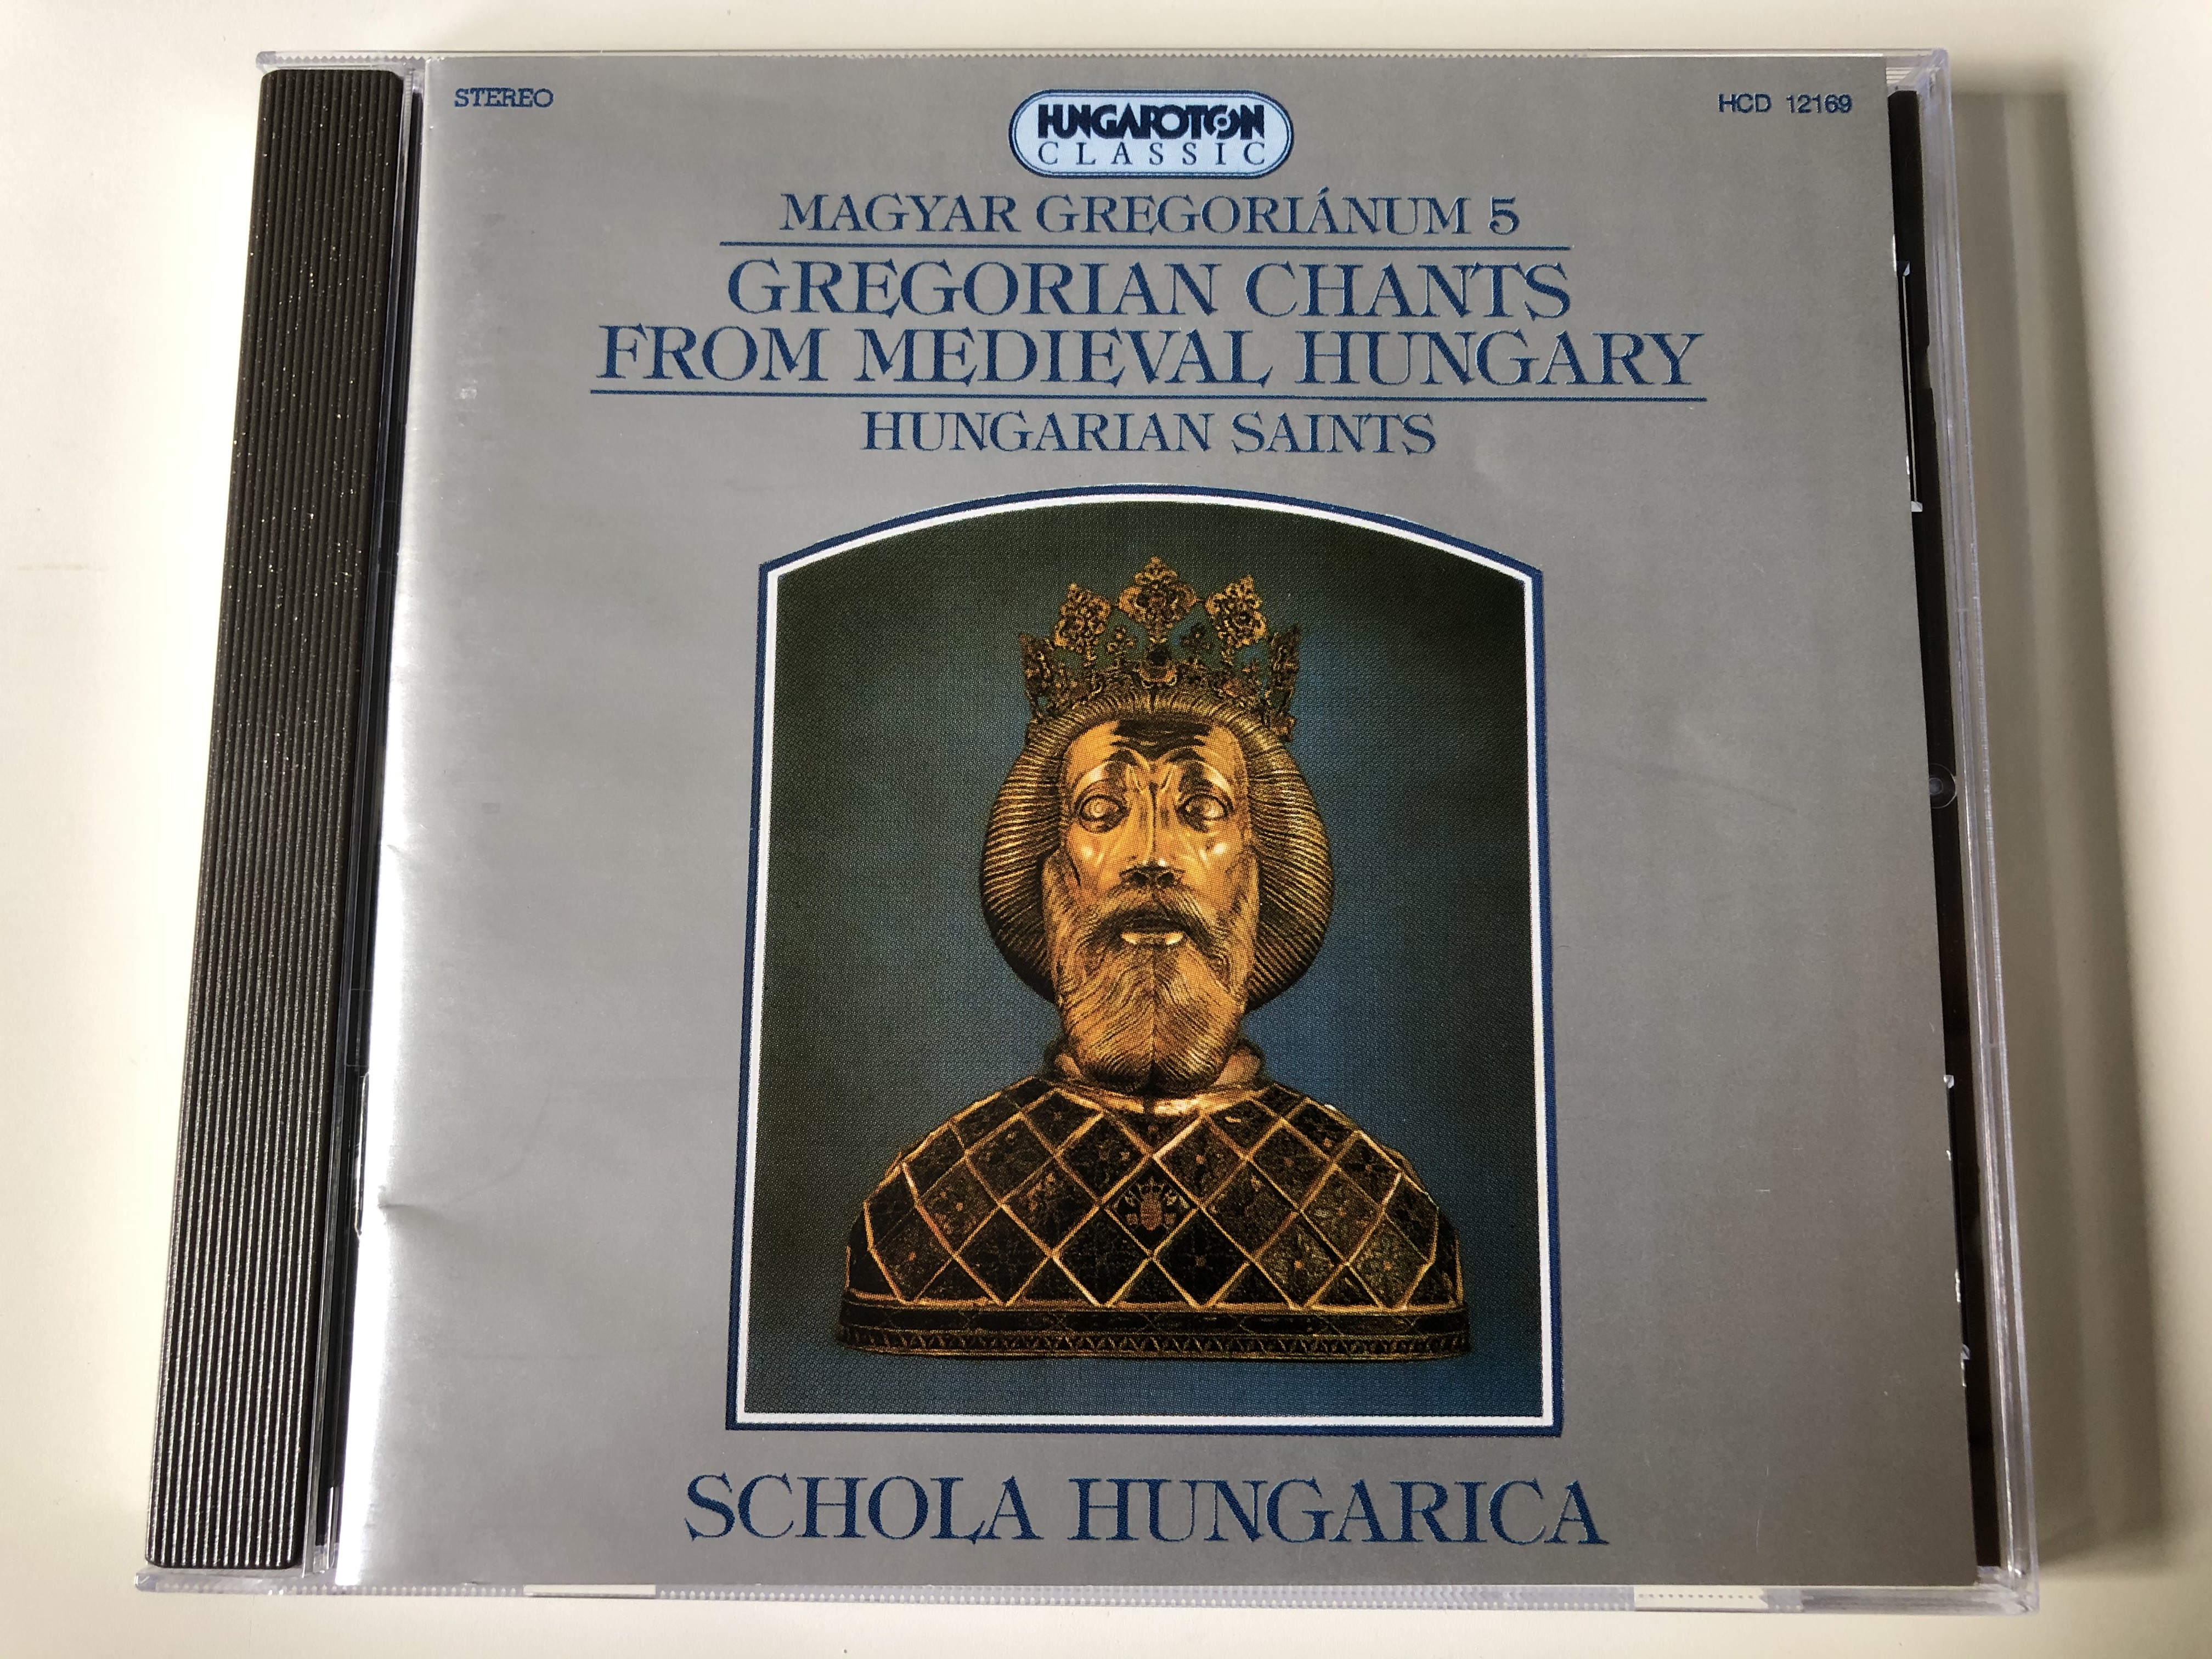 magyar-gregori-num-5-gregorian-chants-from-medieval-hungary-hungarian-saints-schola-hungarica-hungaroton-classic-audio-cd-1994-stereo-hcd-12169-1-.jpg